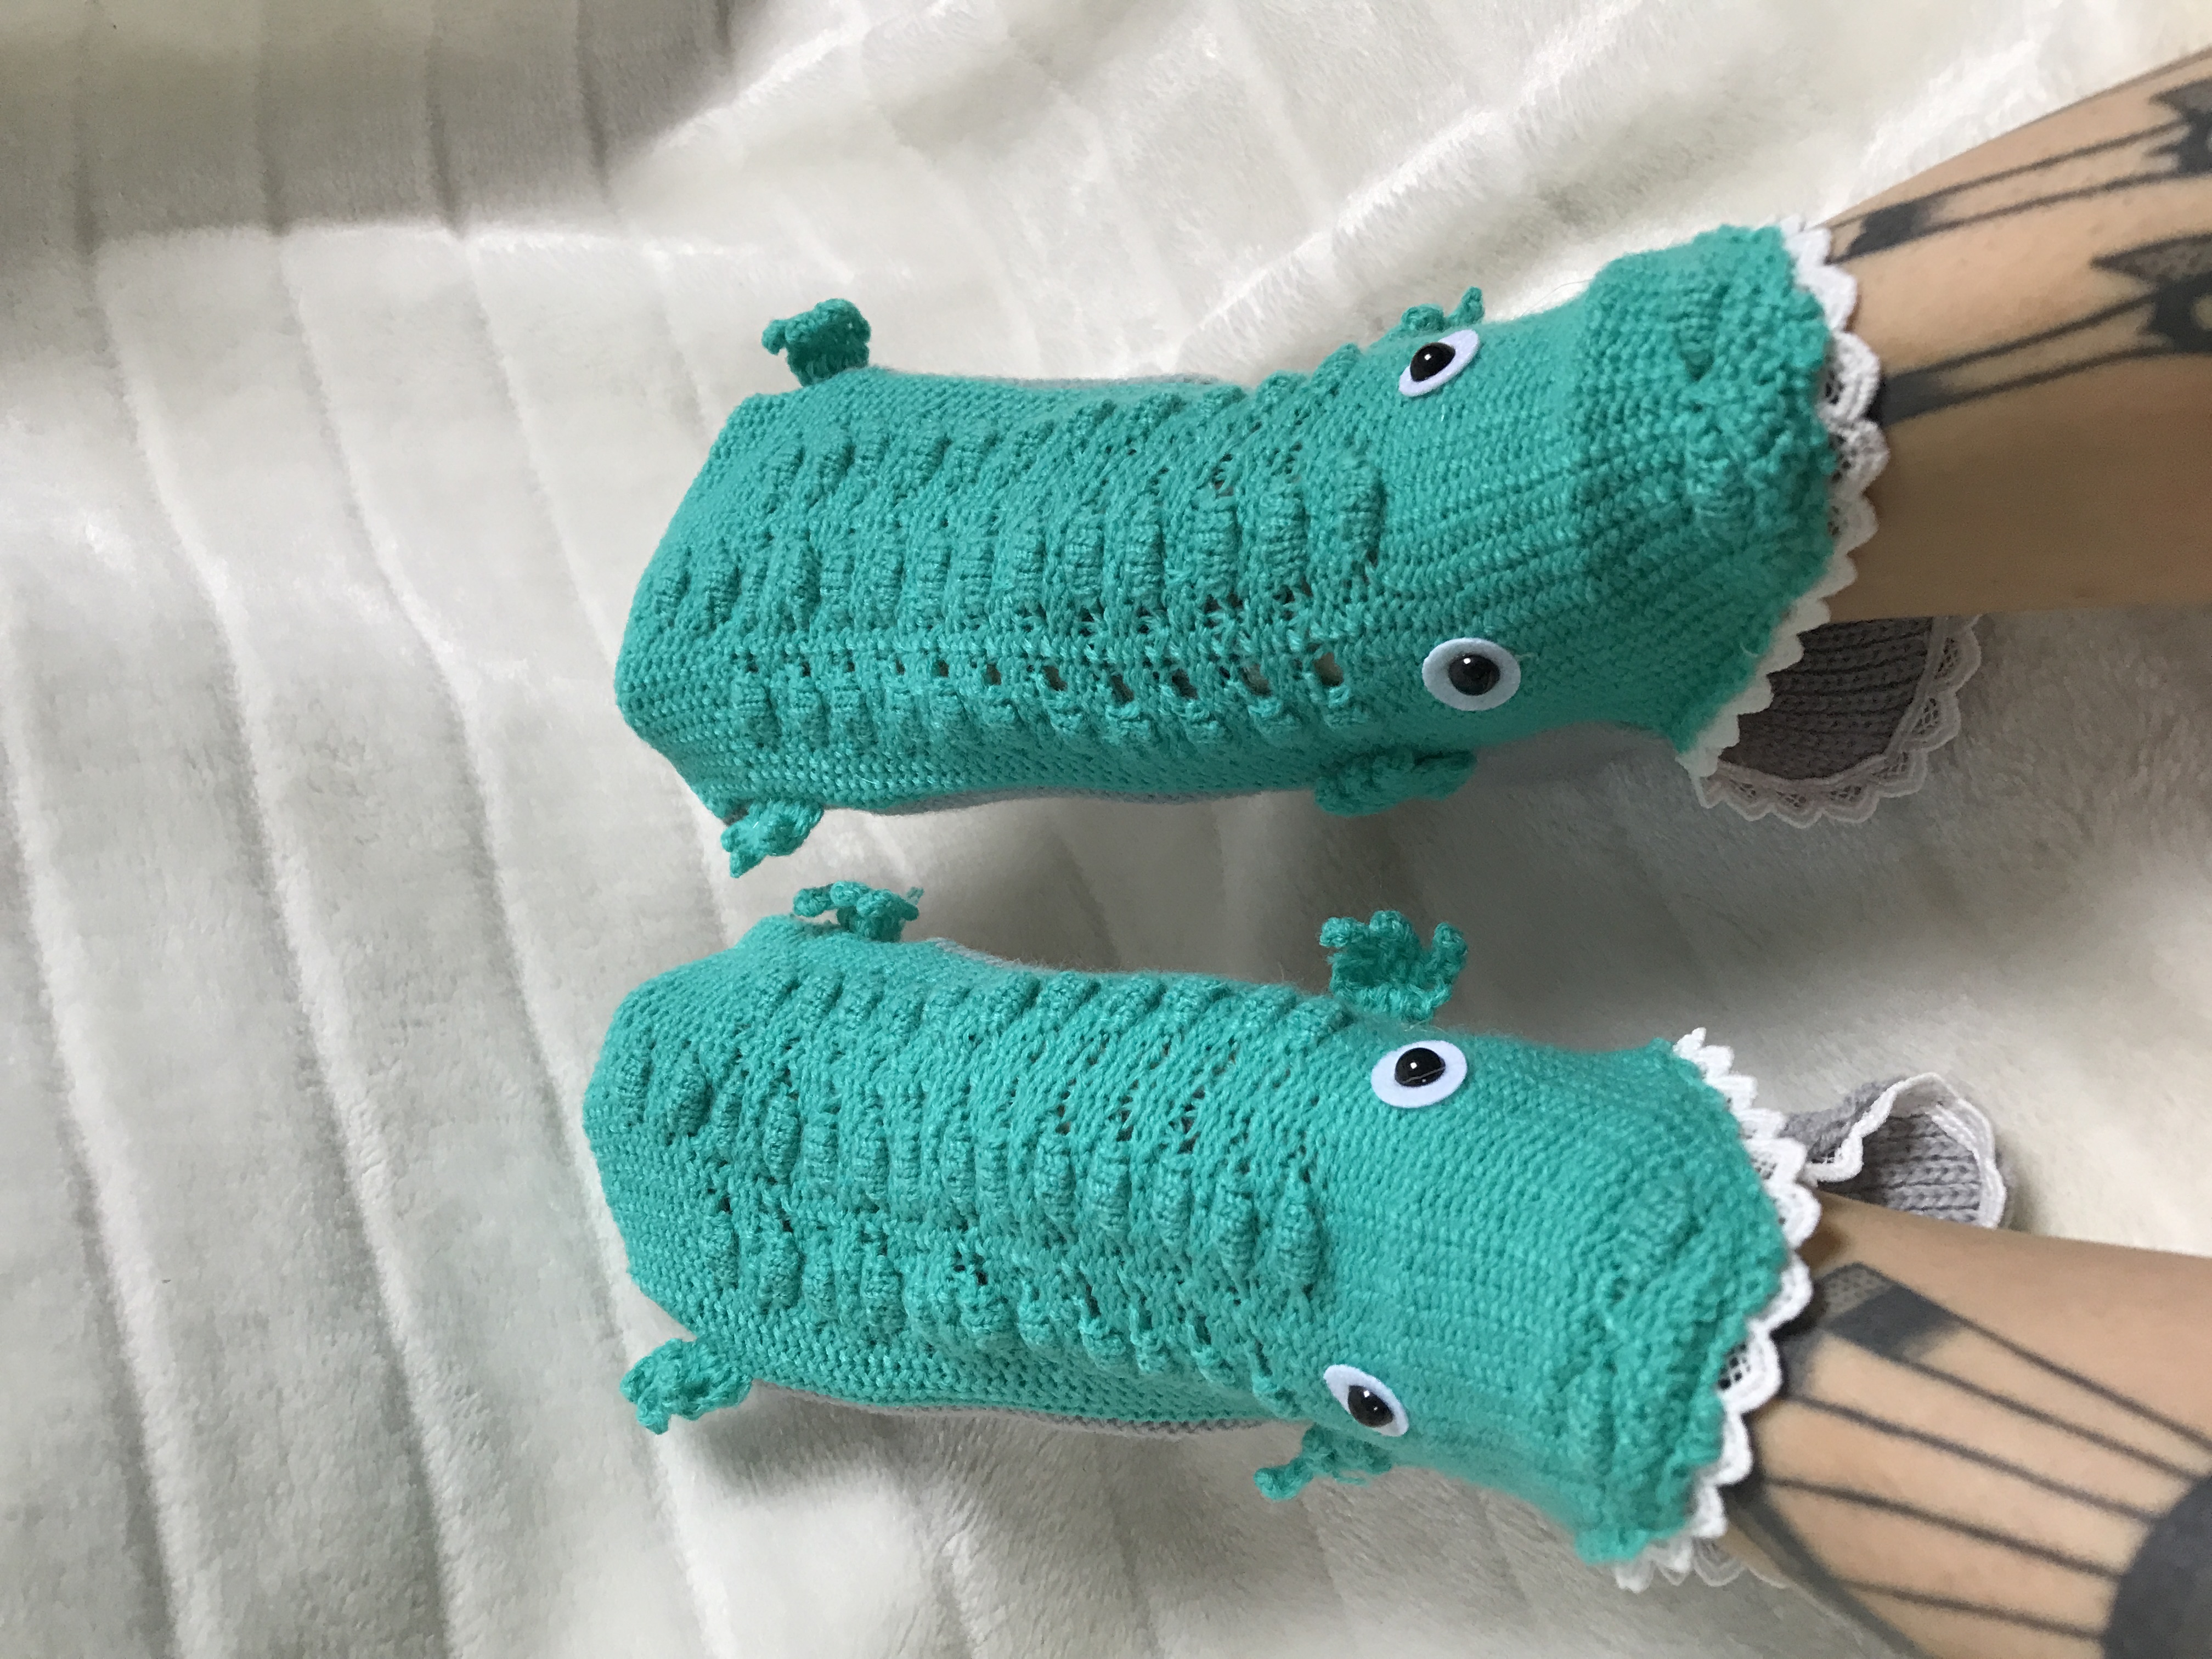 Chaussettes originales animal crocodiles verts "Crocodile socks"